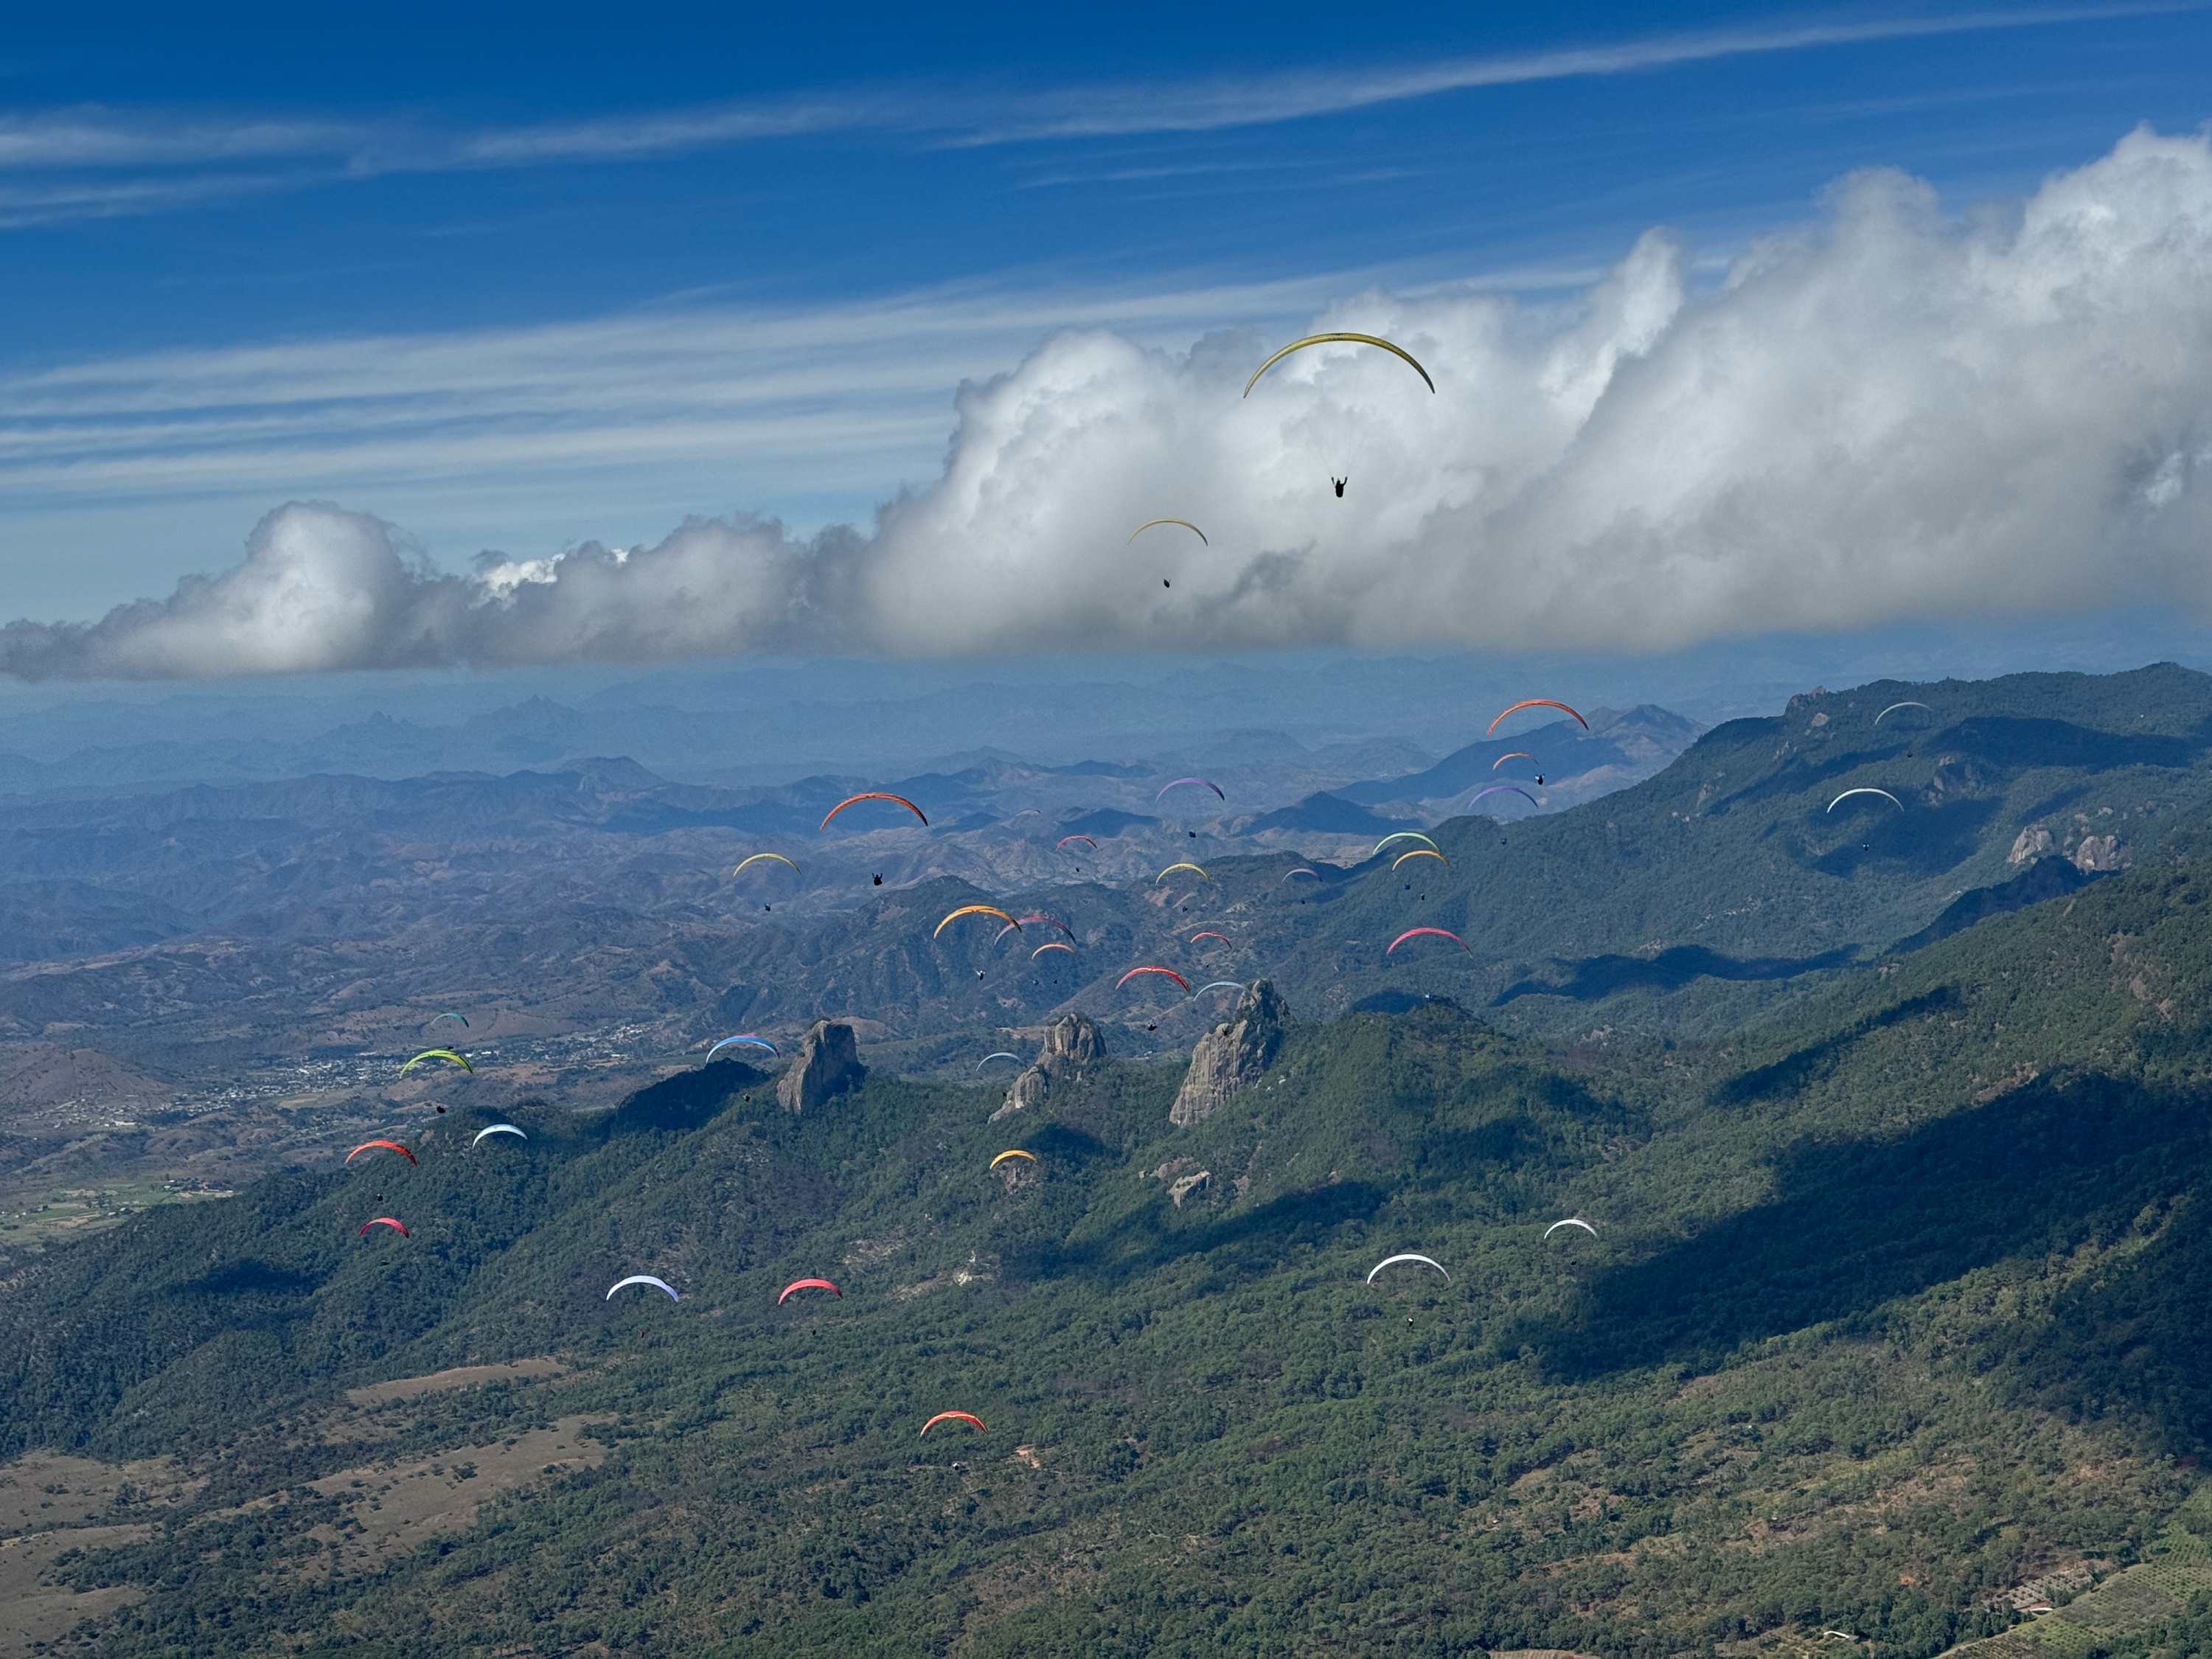 El Peñon paragliding & hang gliding take off